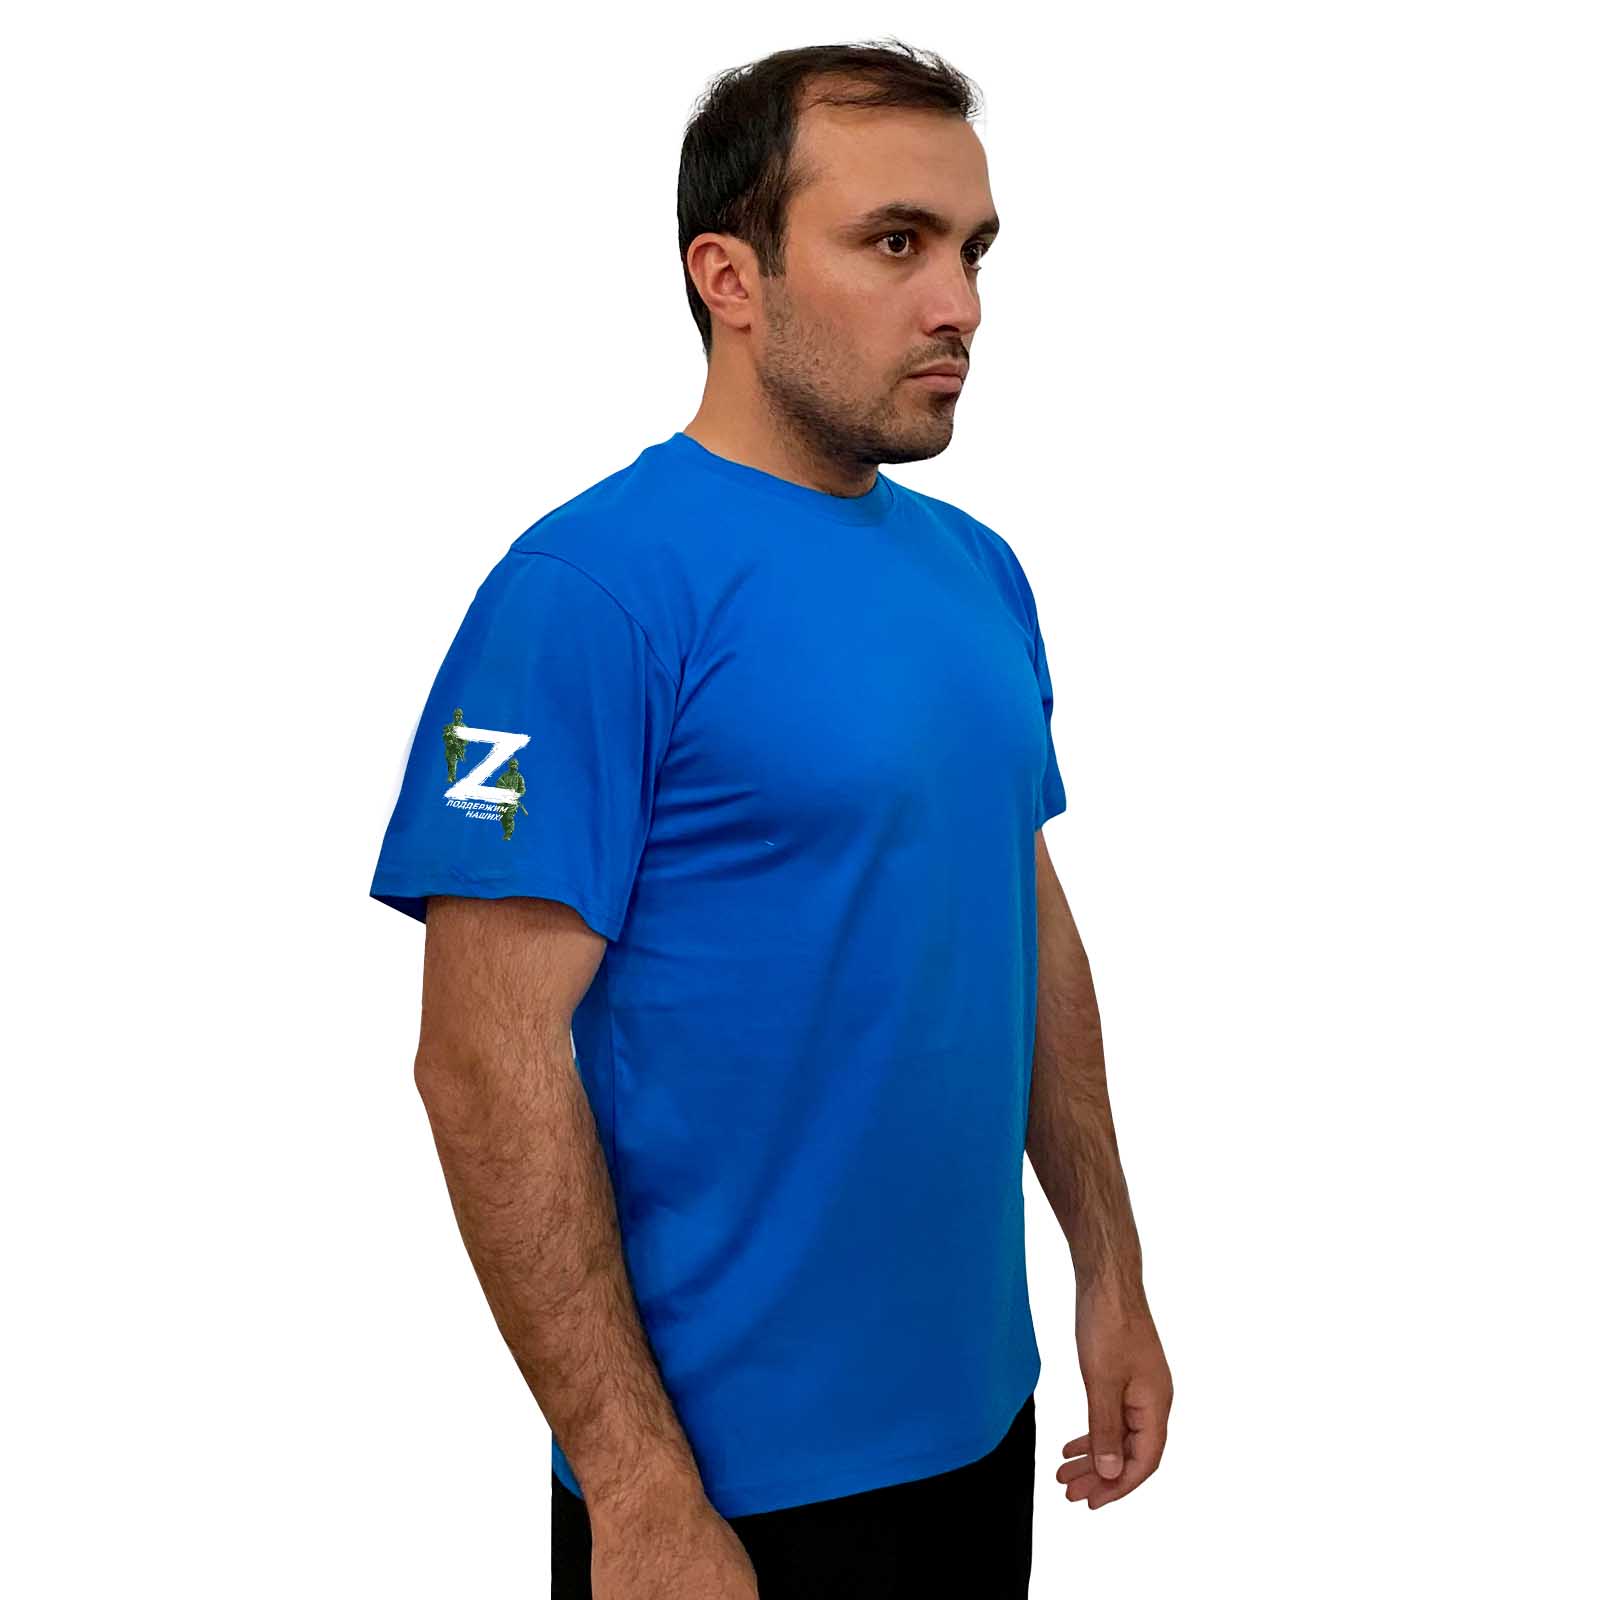 Купить хлопковую голубую футболку Z онлайн